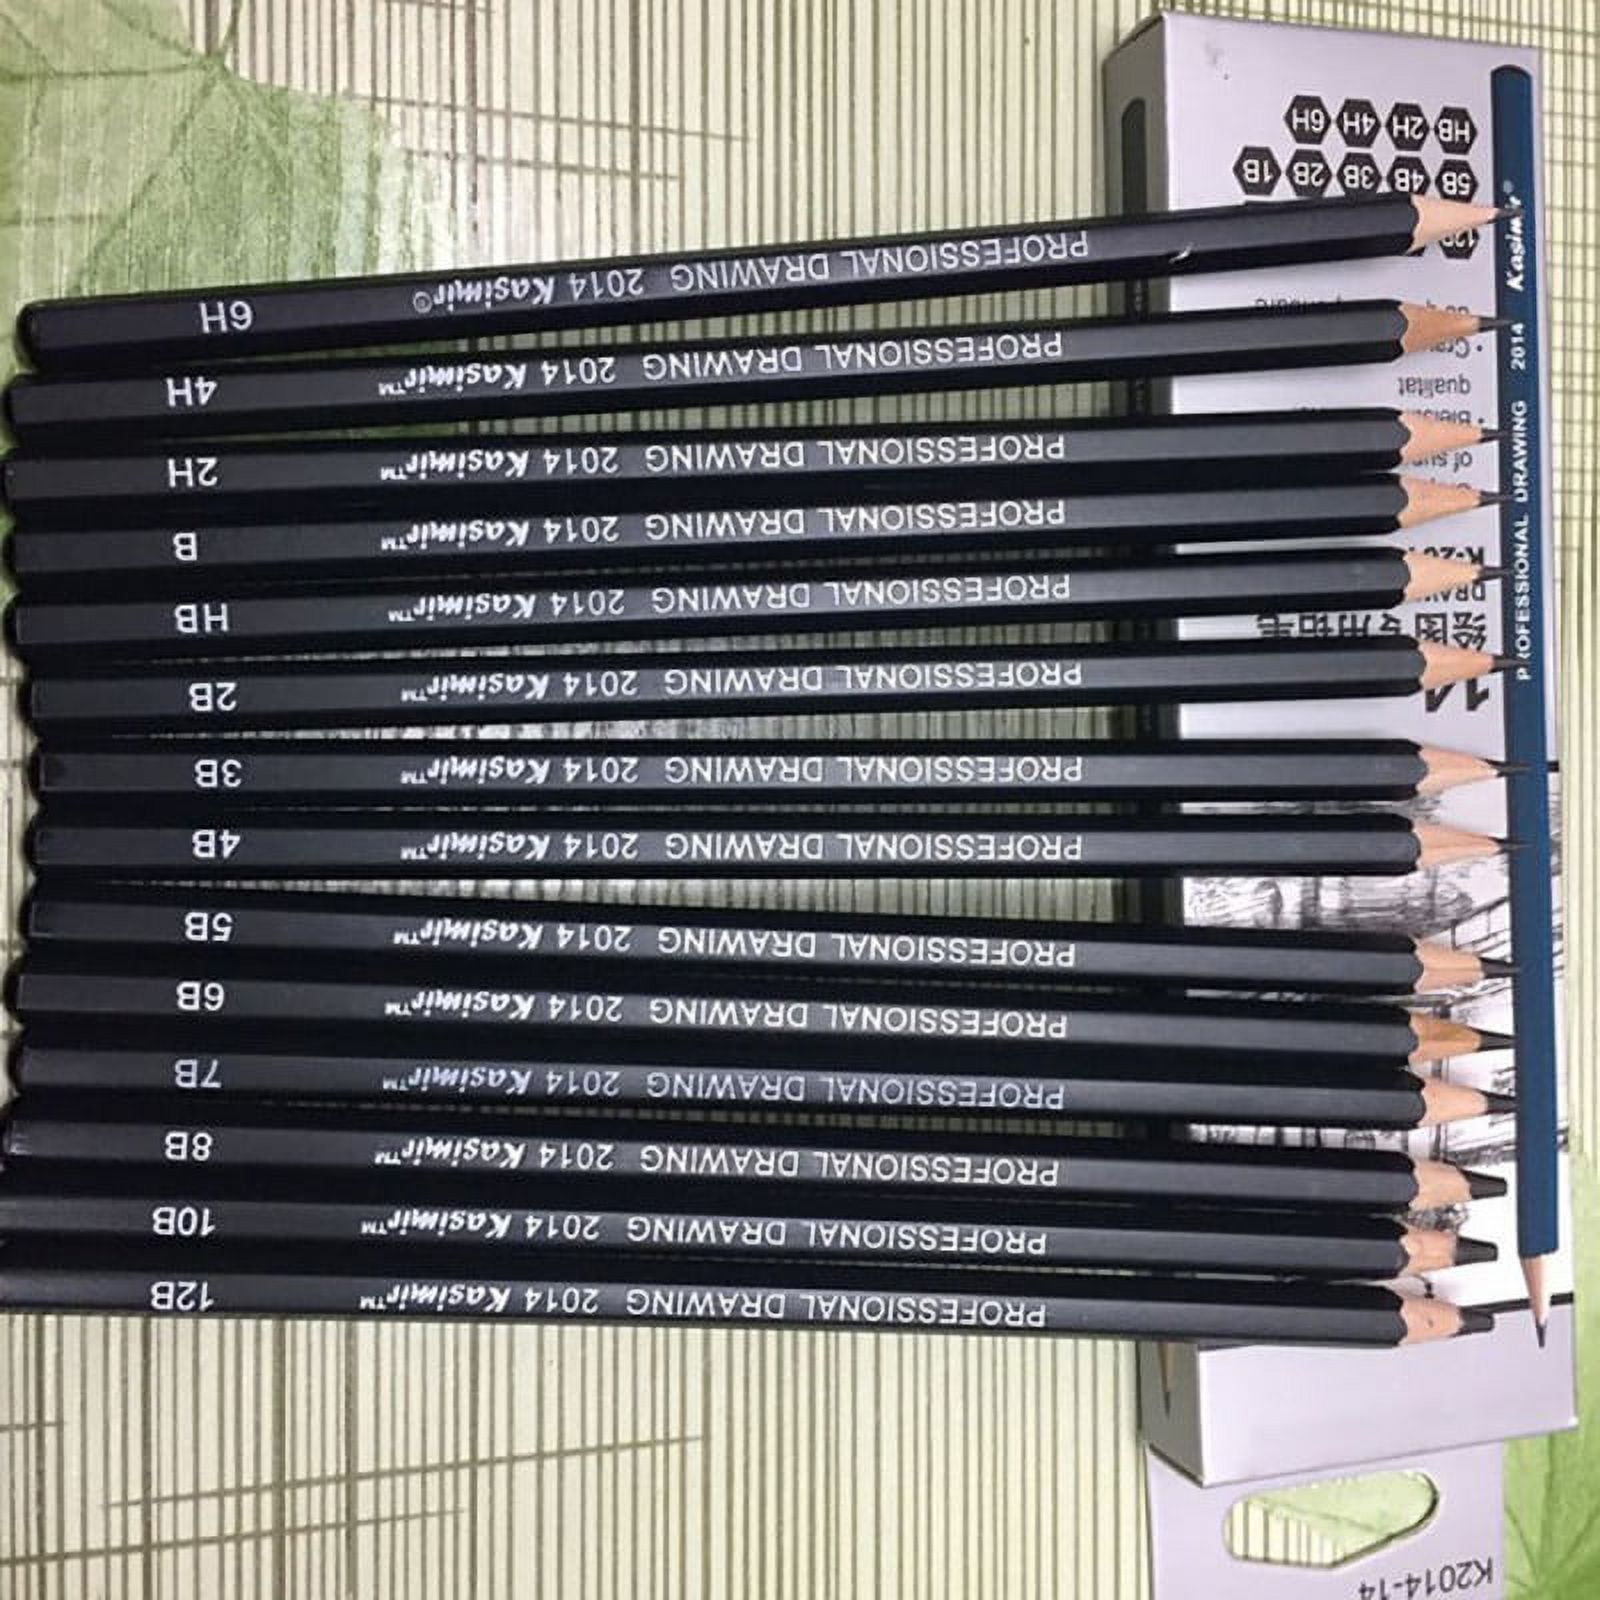 mgs Professional Drawing Sketching Pencil Set, 24 Pieces Art Pencils 14B,  12B, 10B, 9B, 8B, 7B